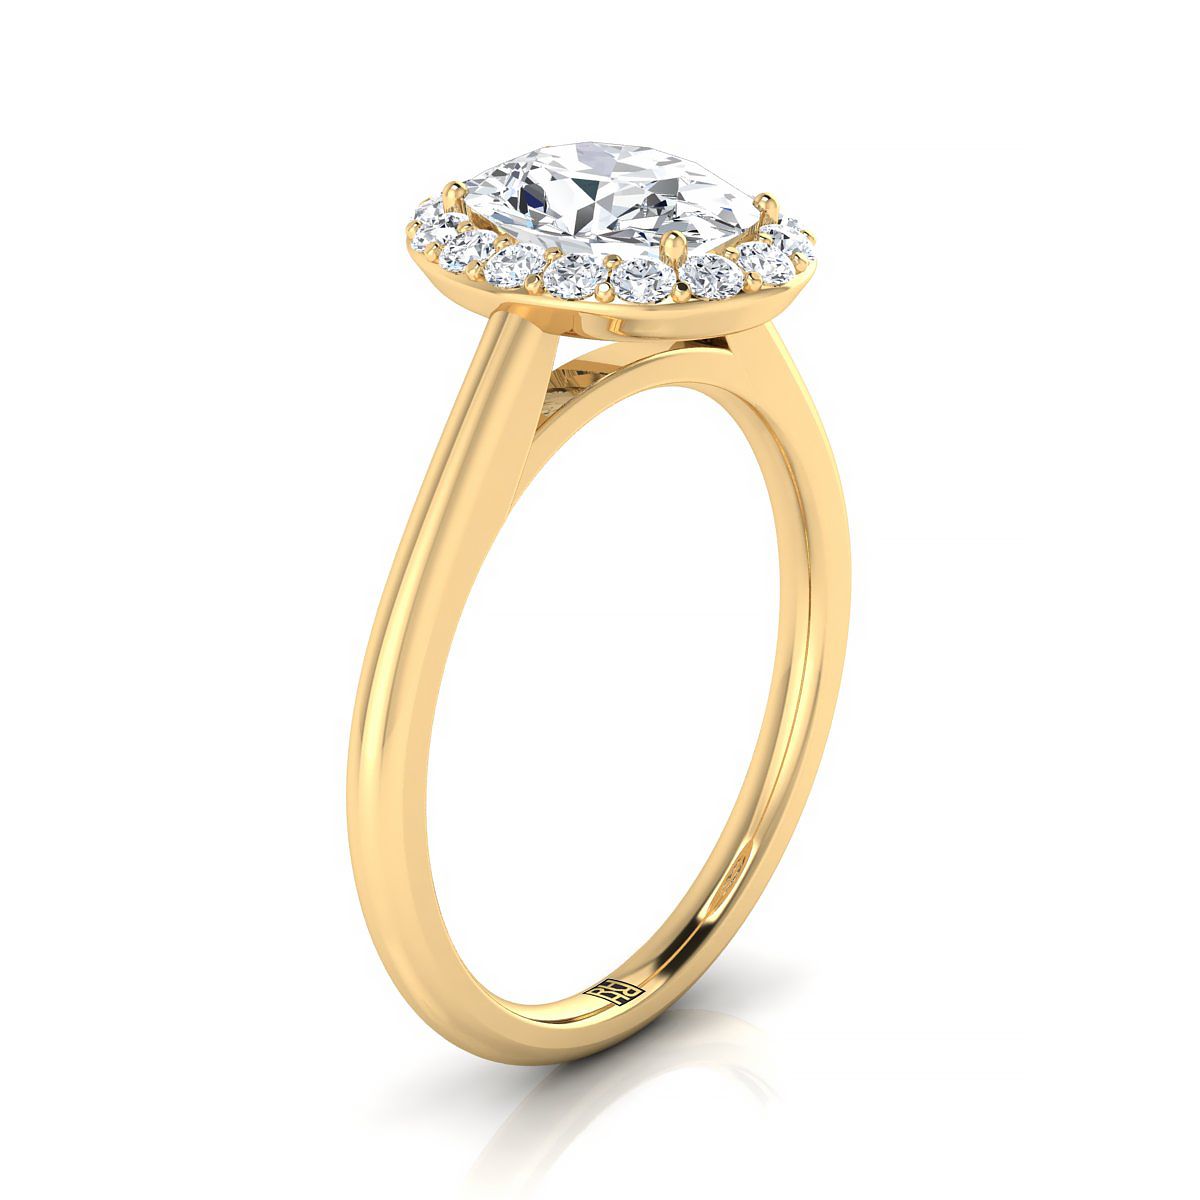 18K Yellow Gold Oval Aquamarine Shared Prong Diamond Halo Engagement Ring -1/5ctw